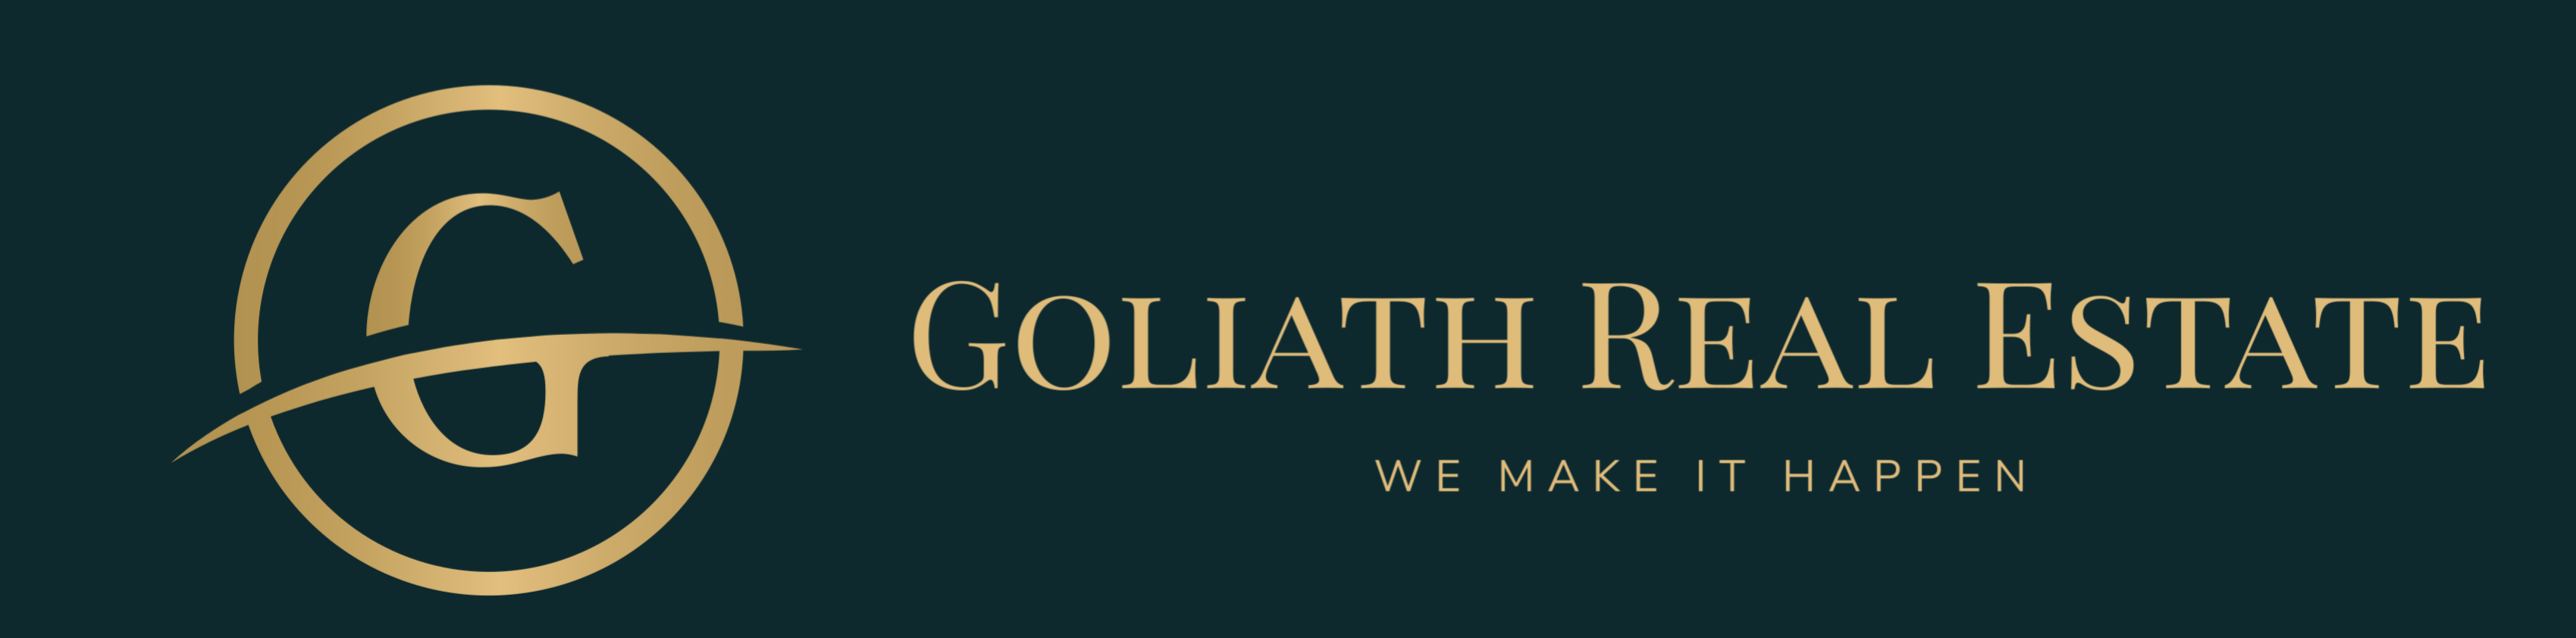 Goliath Real Estate Services